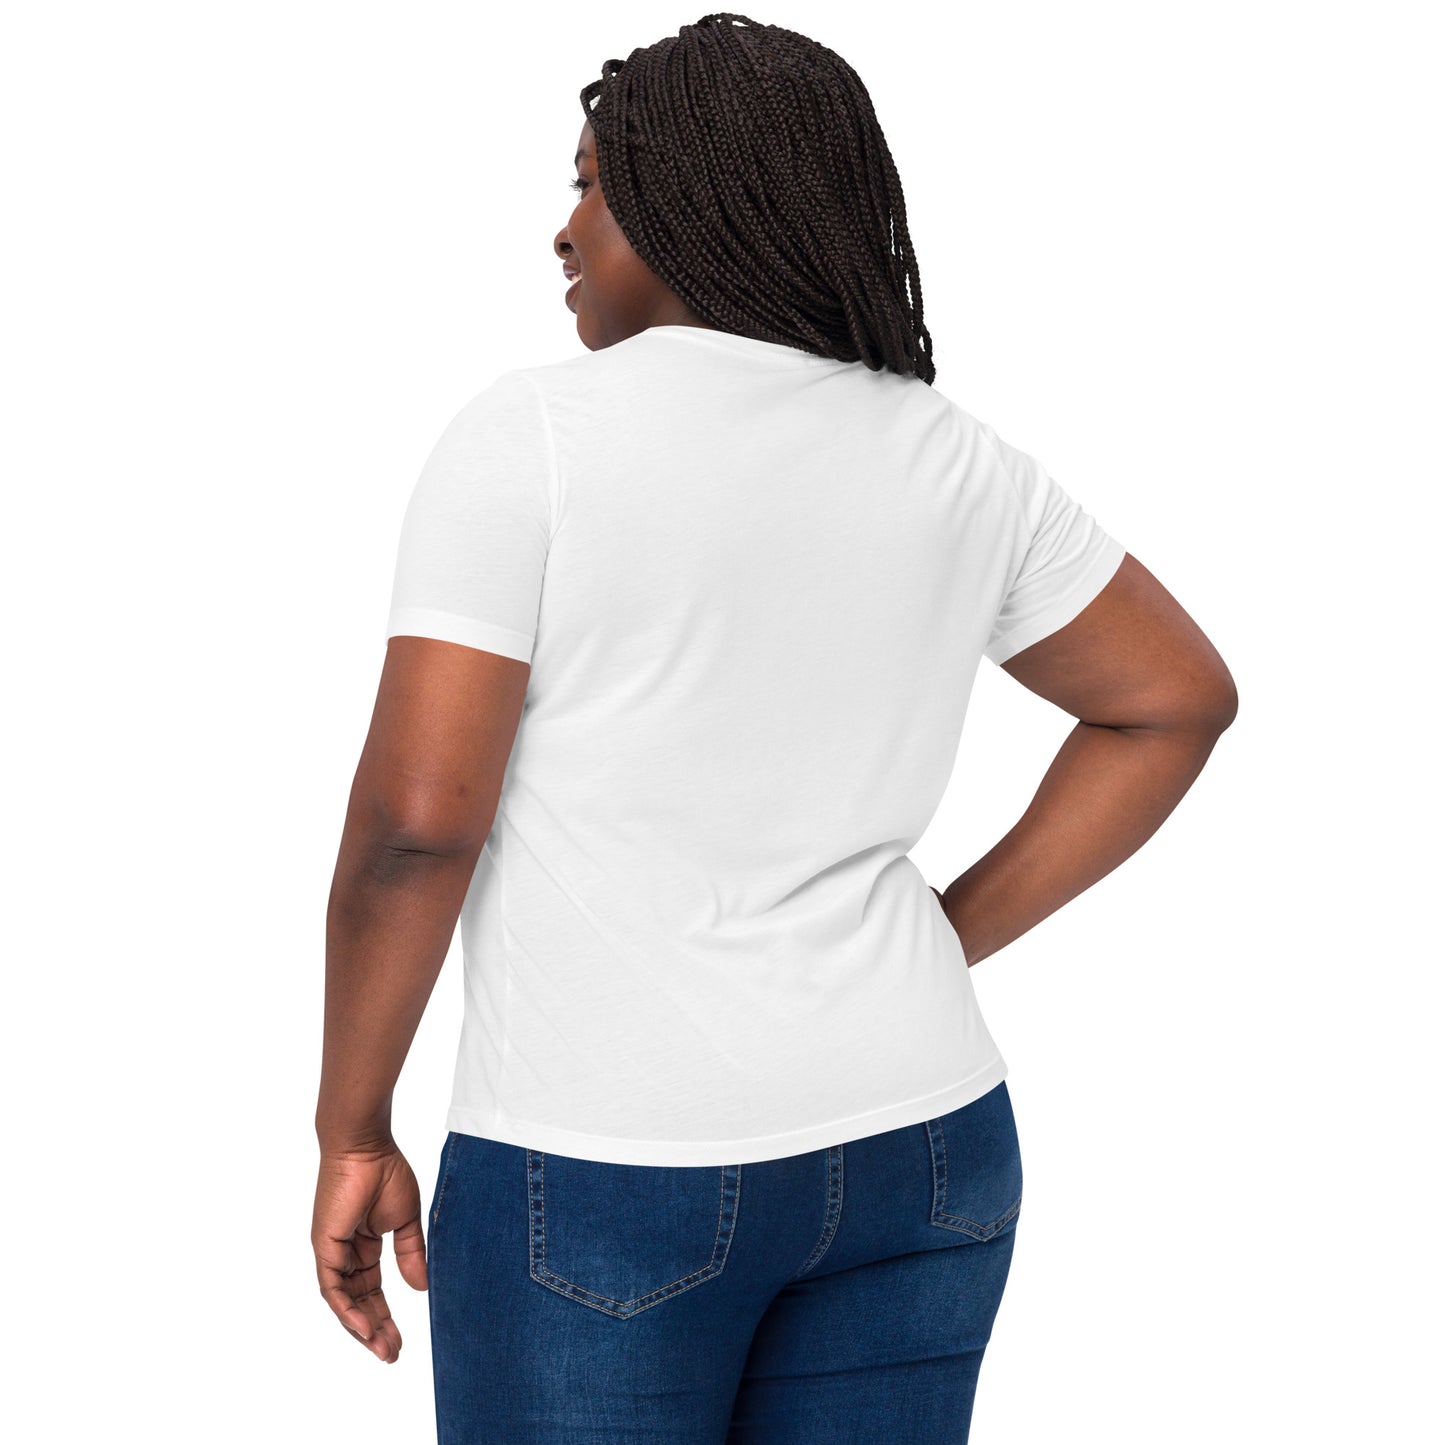 "America Needs Main Streets' White & Orange Women’s Relaxed Tri-Blend t-shirt